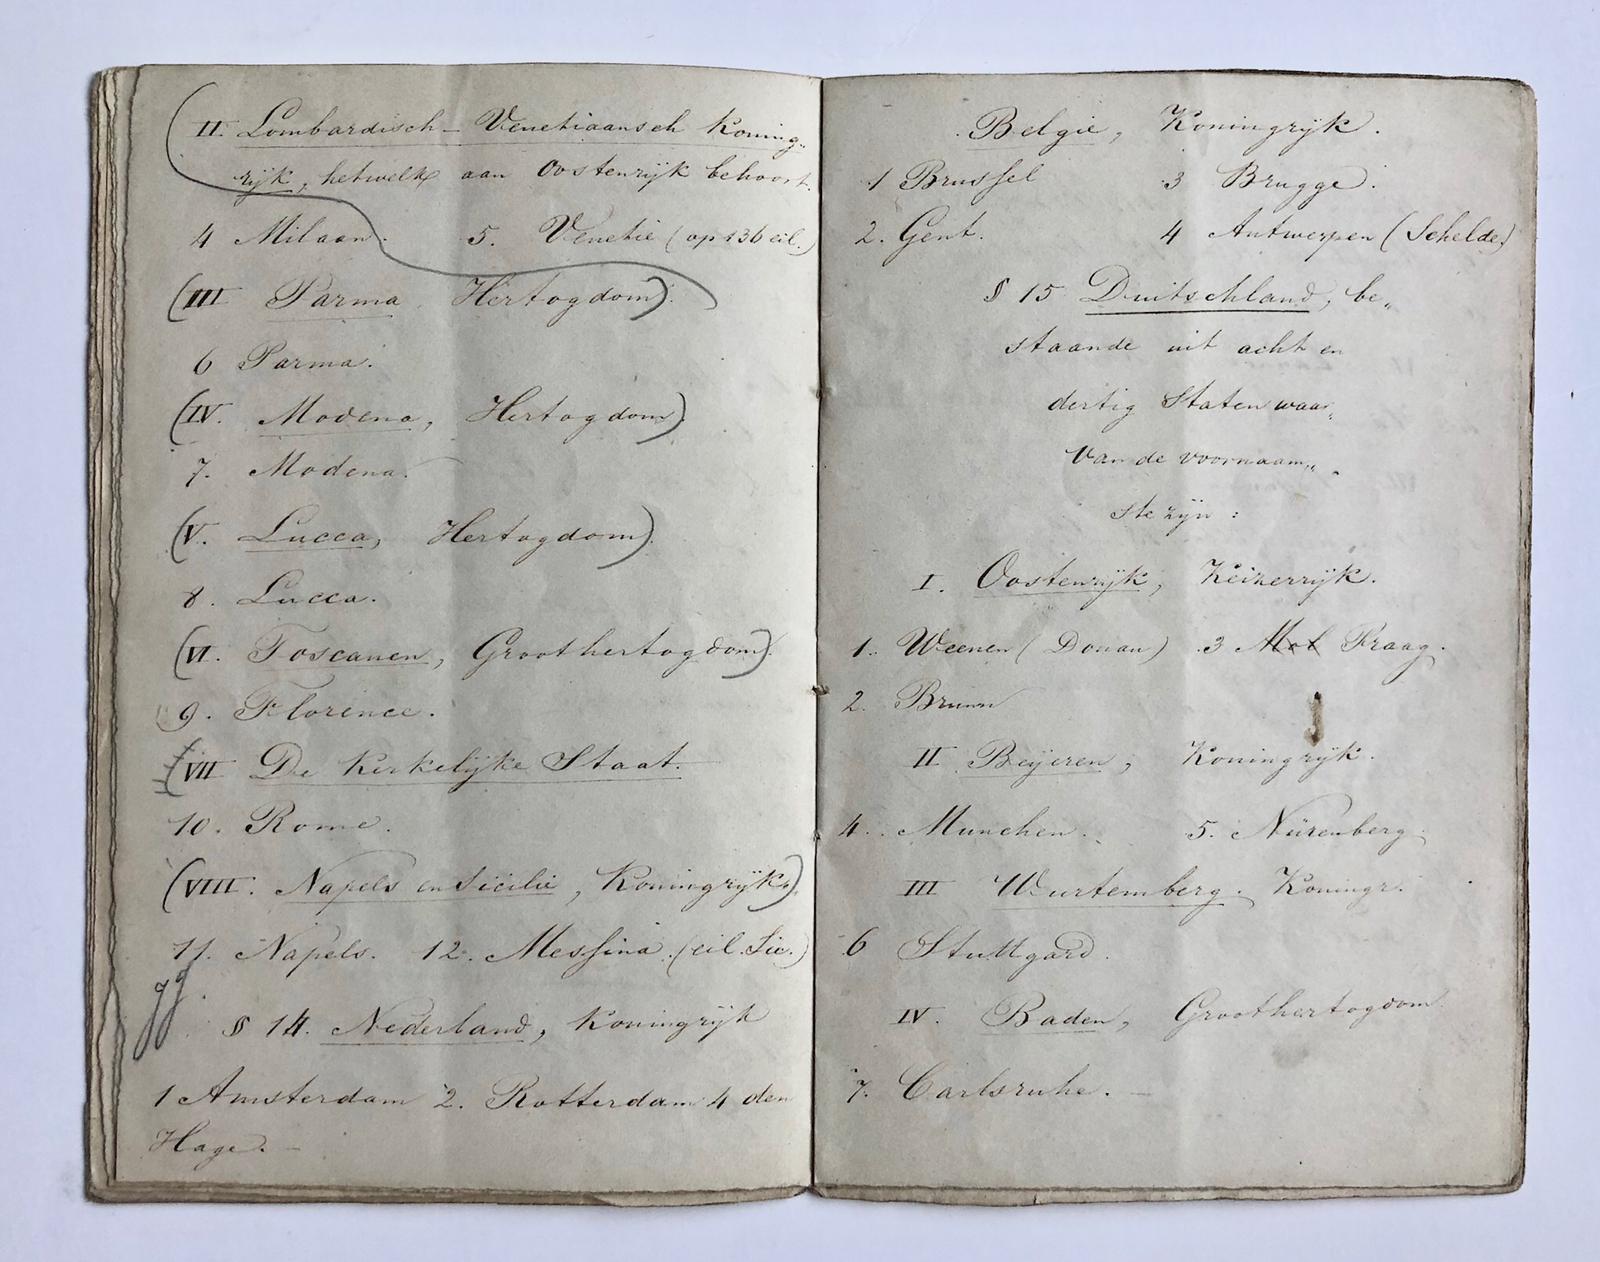  - [School Notebook 1861] Schoolschriftje aardrijkskunde van J. v.d. Belt, Kapelle, 1861, 15 pag., manuscript.